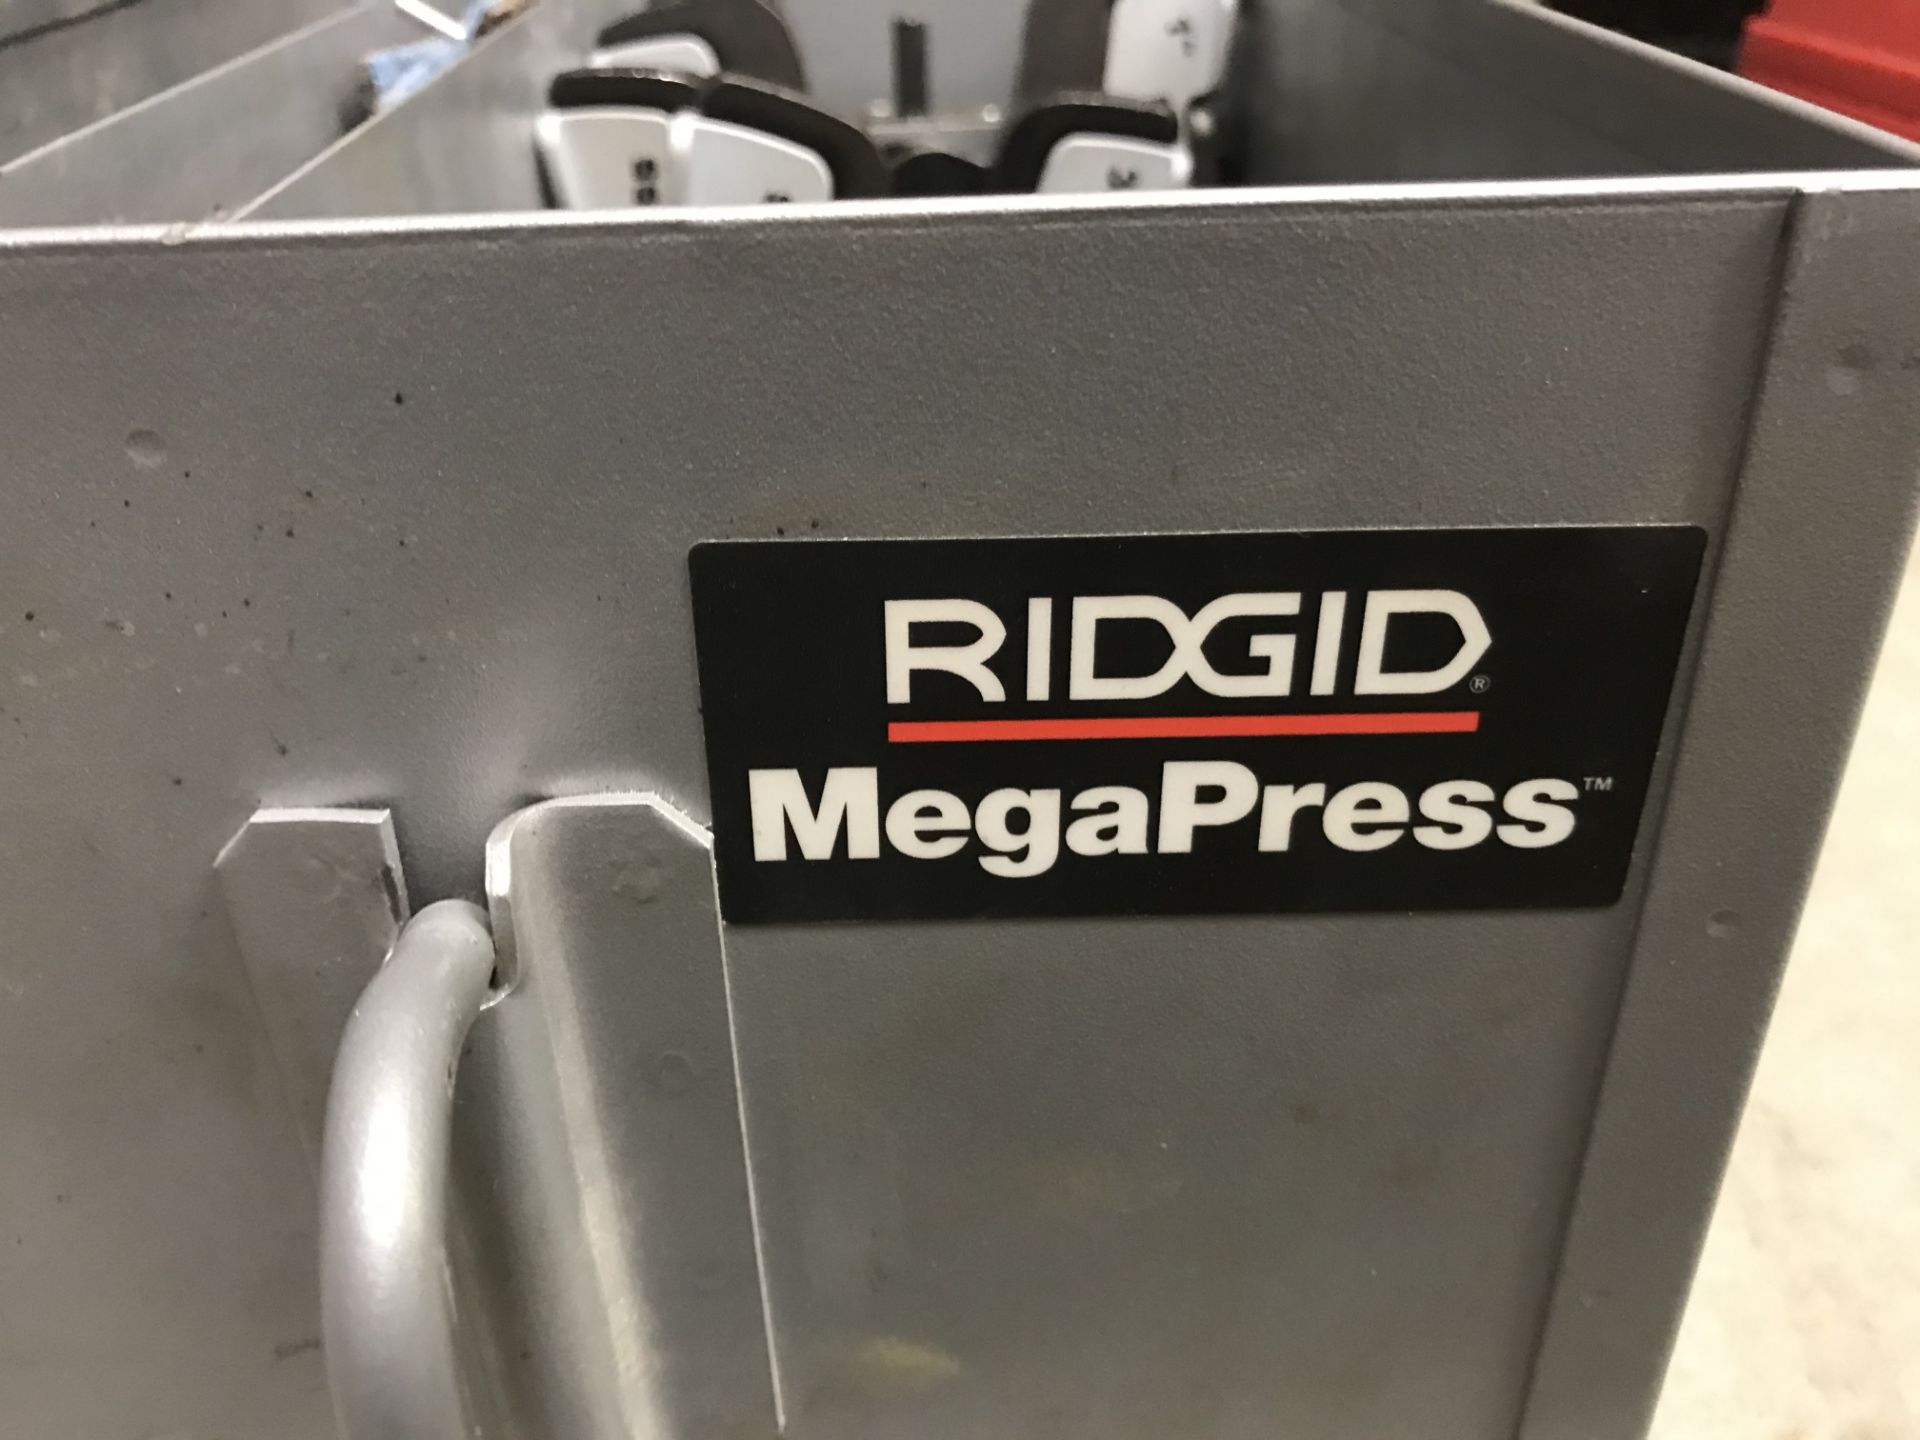 Ridgid Megapress 9 Piece Kit w/Box & (2) Ridgid #25020 Couplings & Asst. Couplings - Image 2 of 3